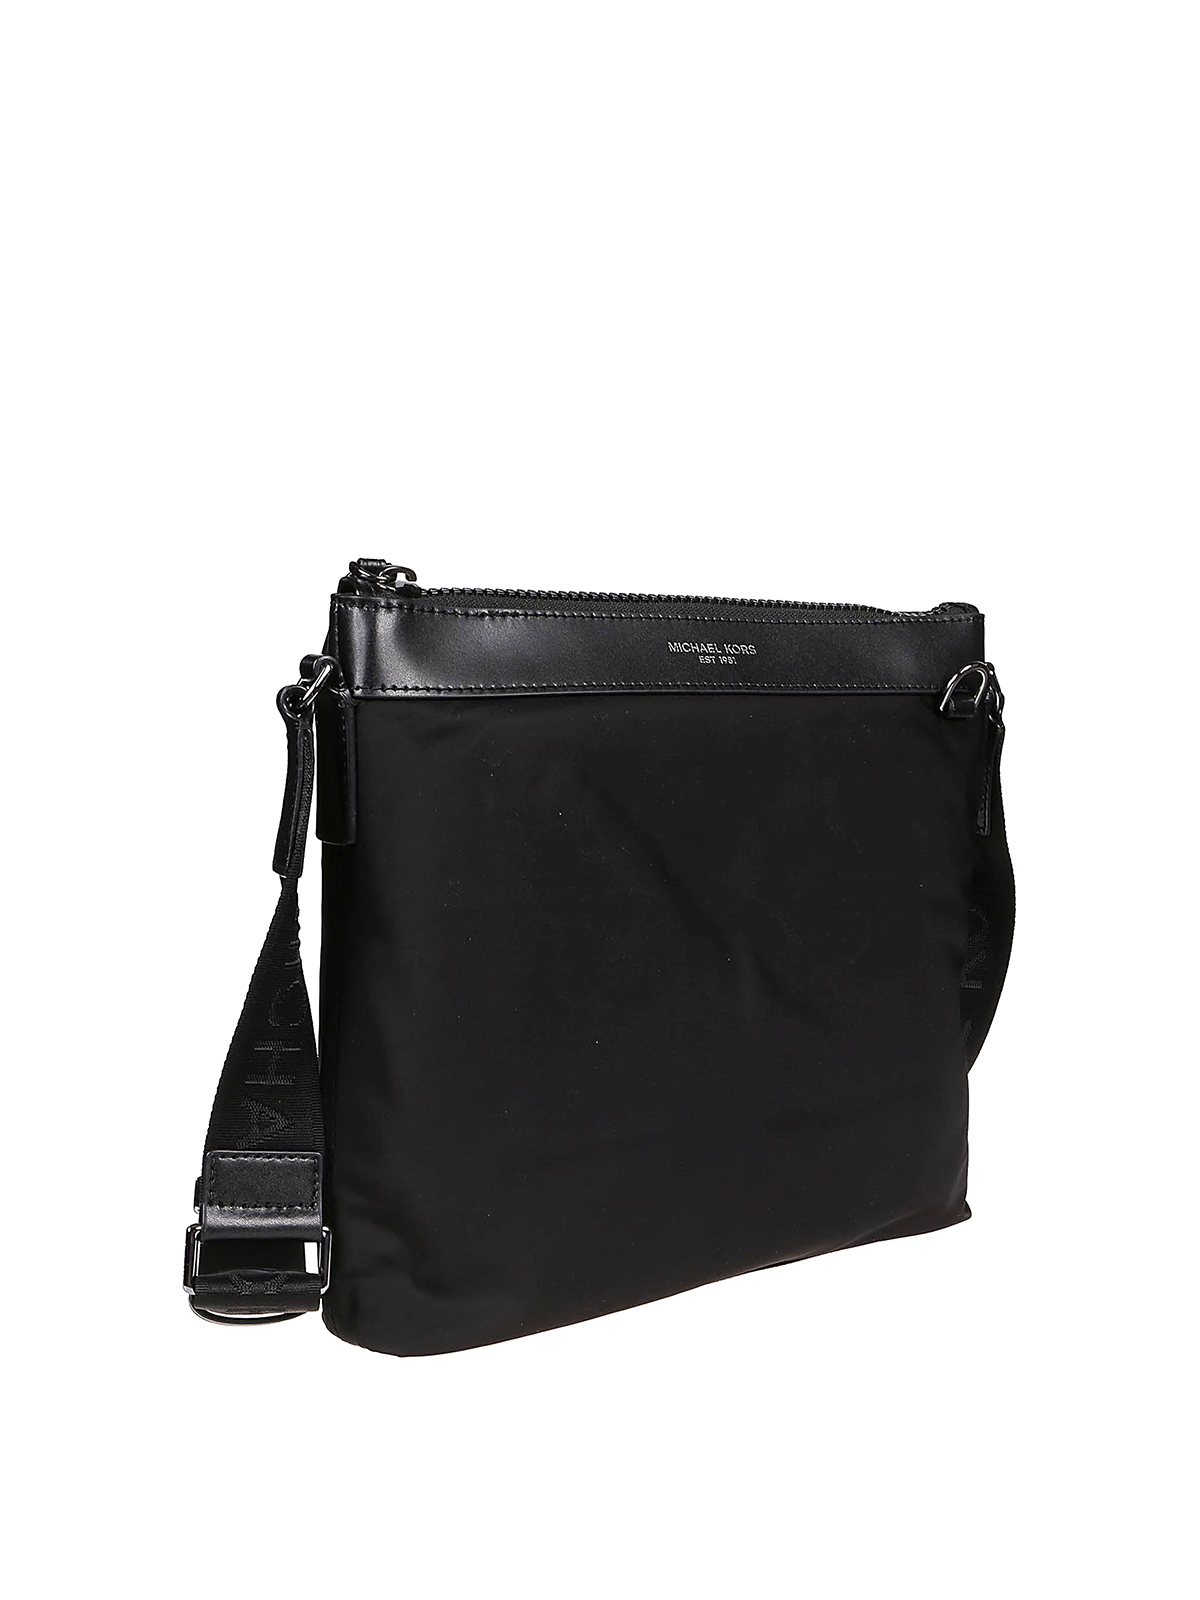 Cross body bags Michael Kors - Brooklyn large black shoulder bag -  33U9MBNM1C001